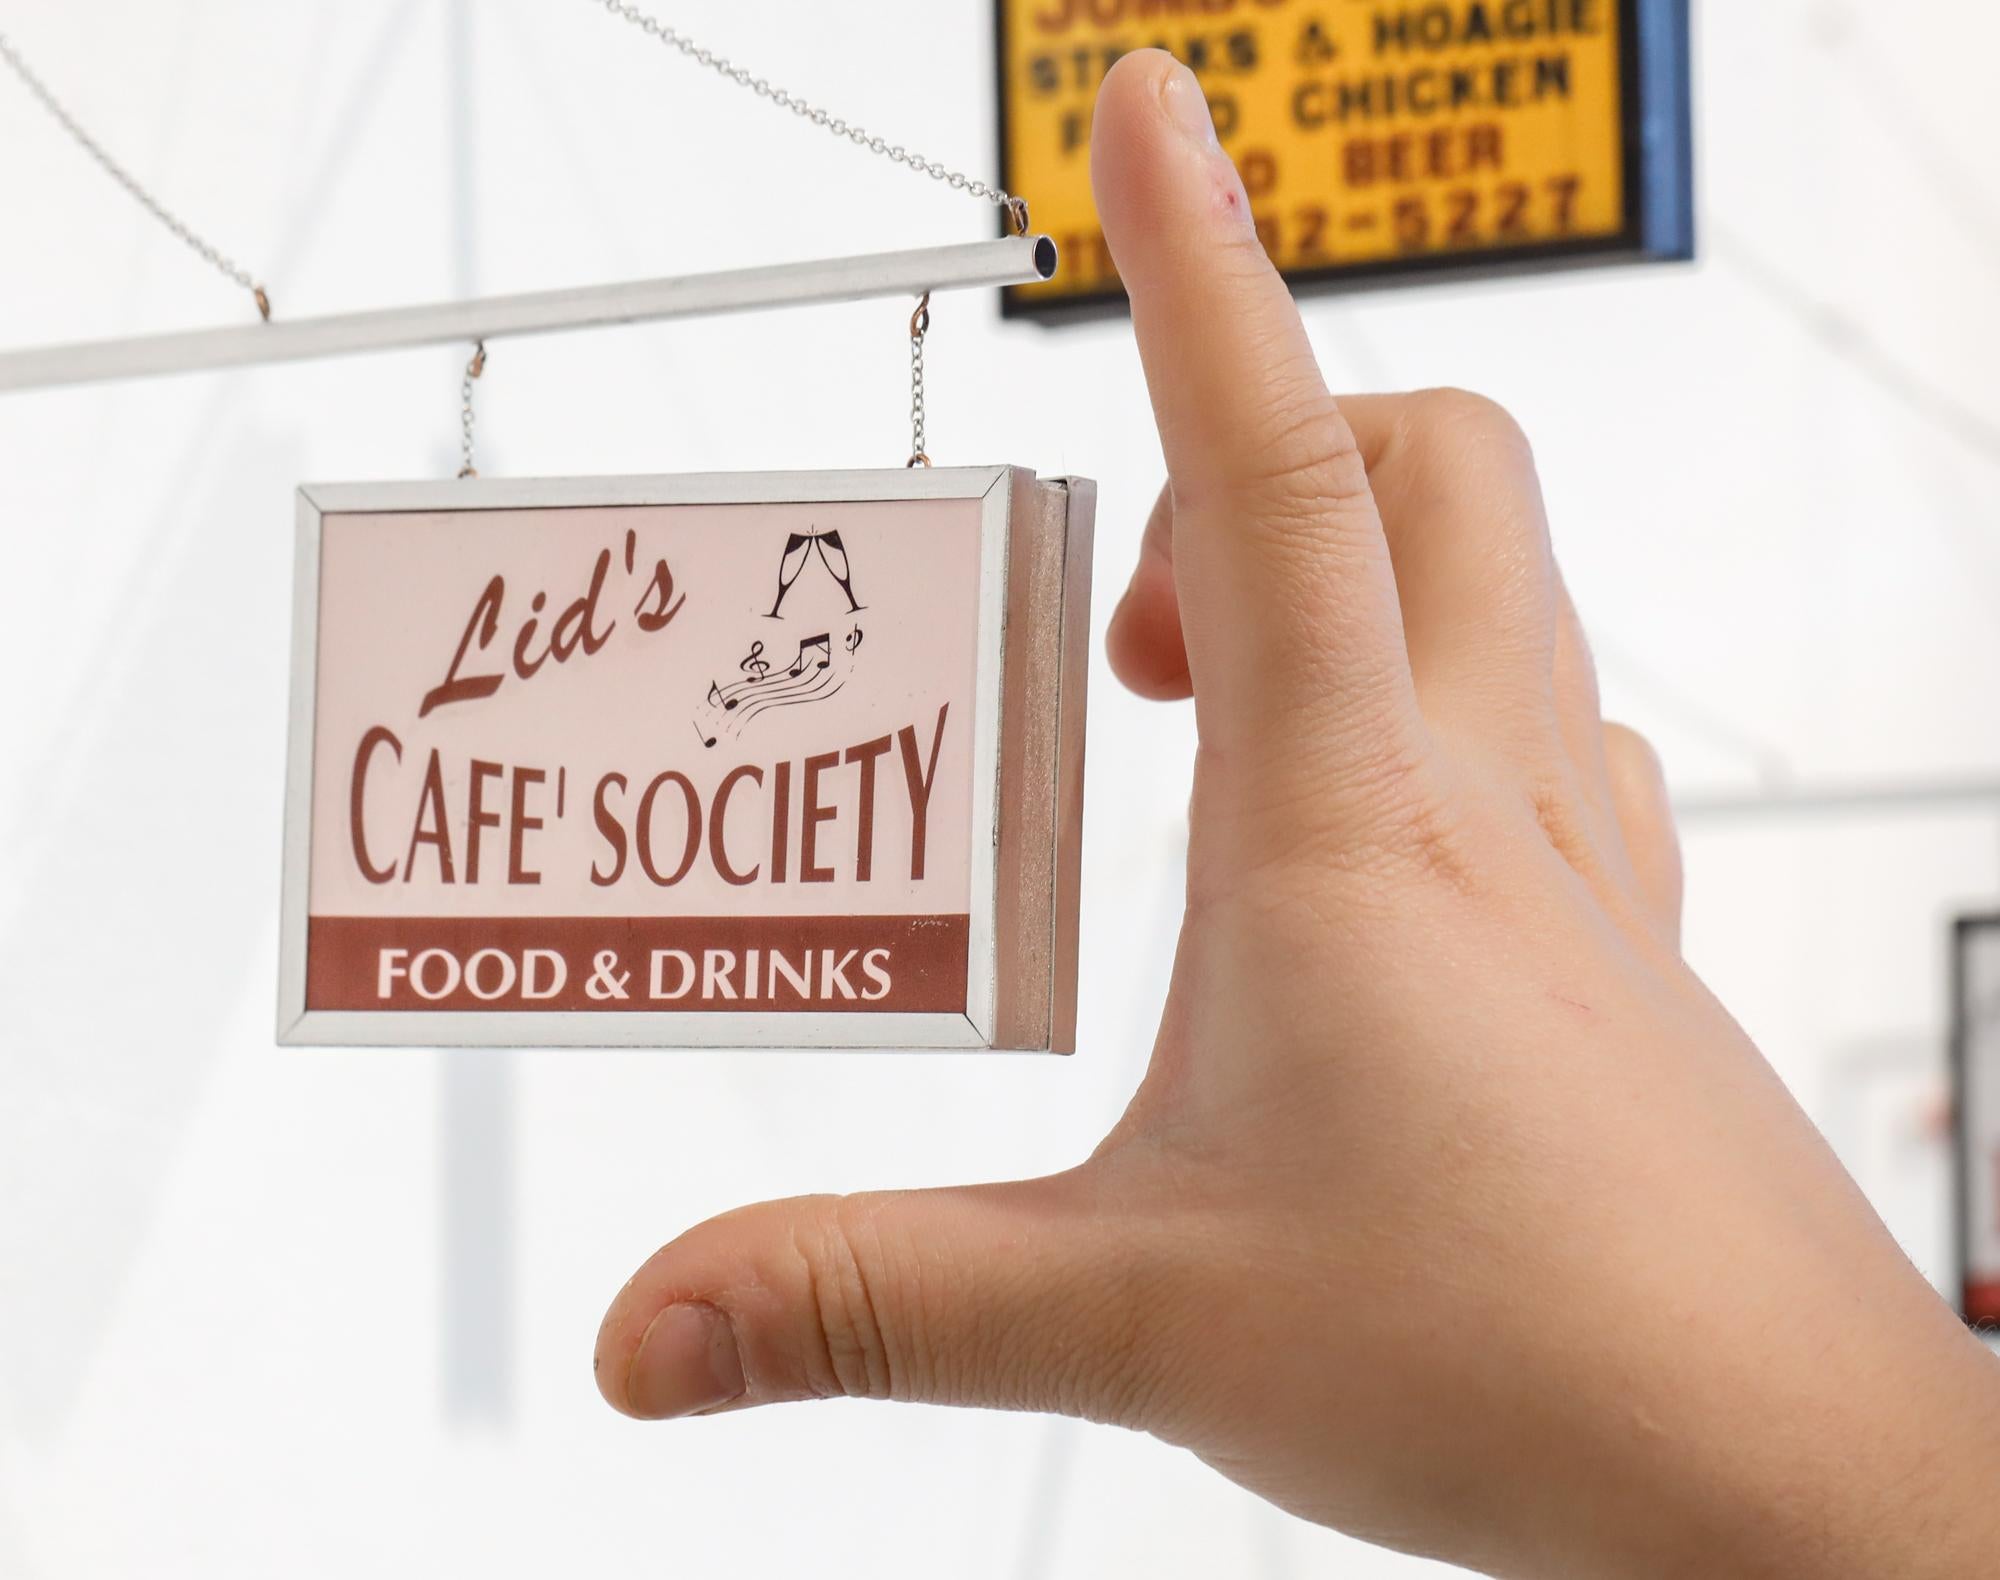 Cafe Society Deckel''s Cafe im Angebot 2